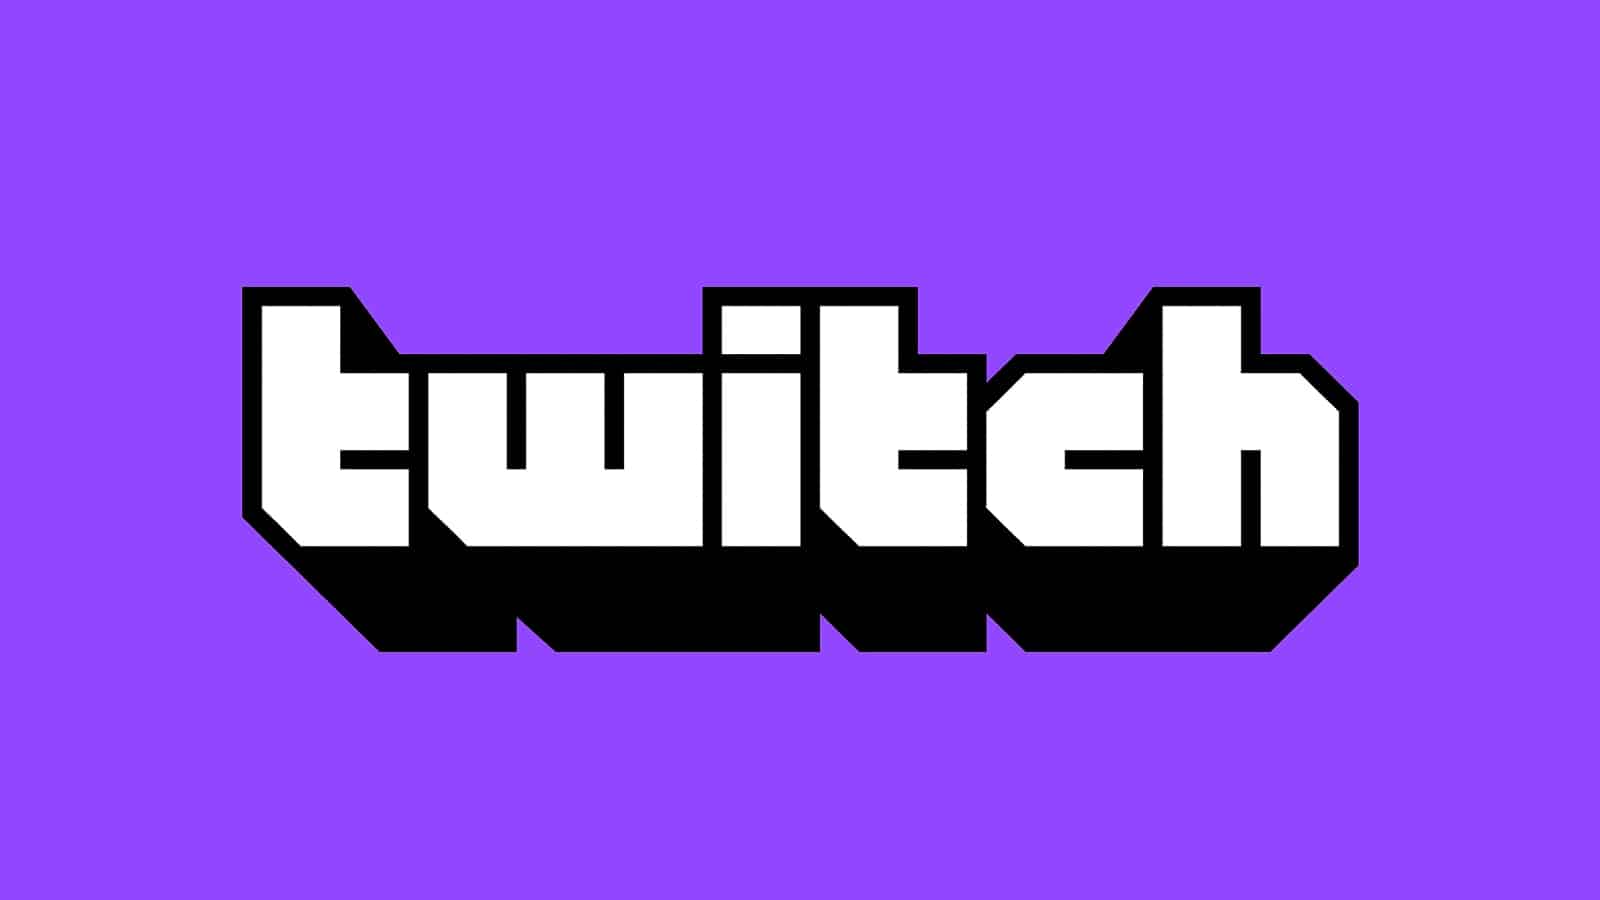 Twitch purple